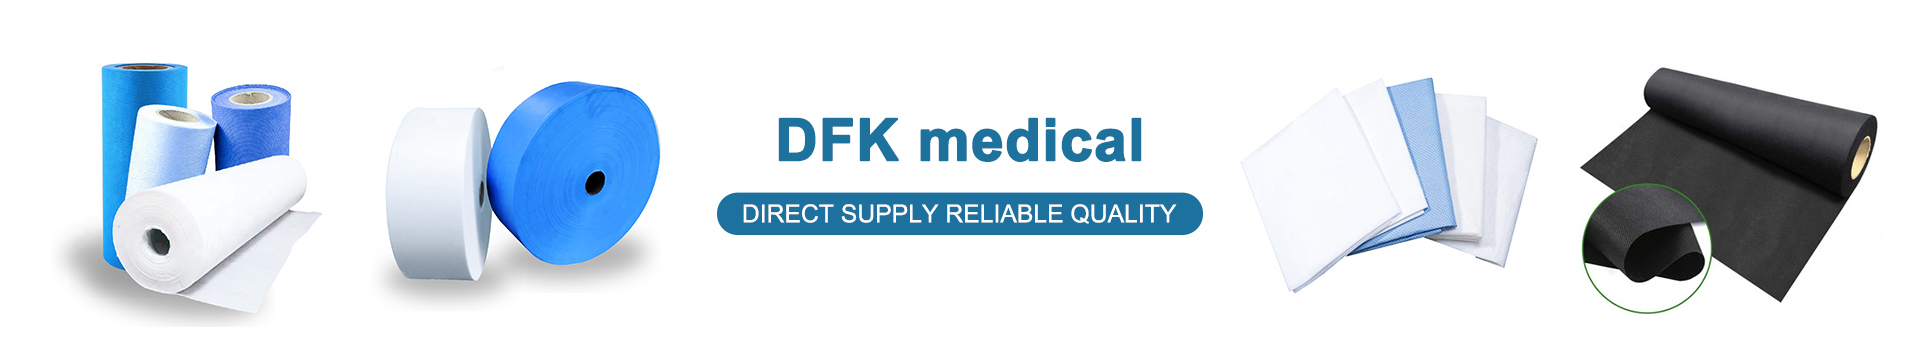 Qingdao DongFuKang medical suppliers Co.Ltd